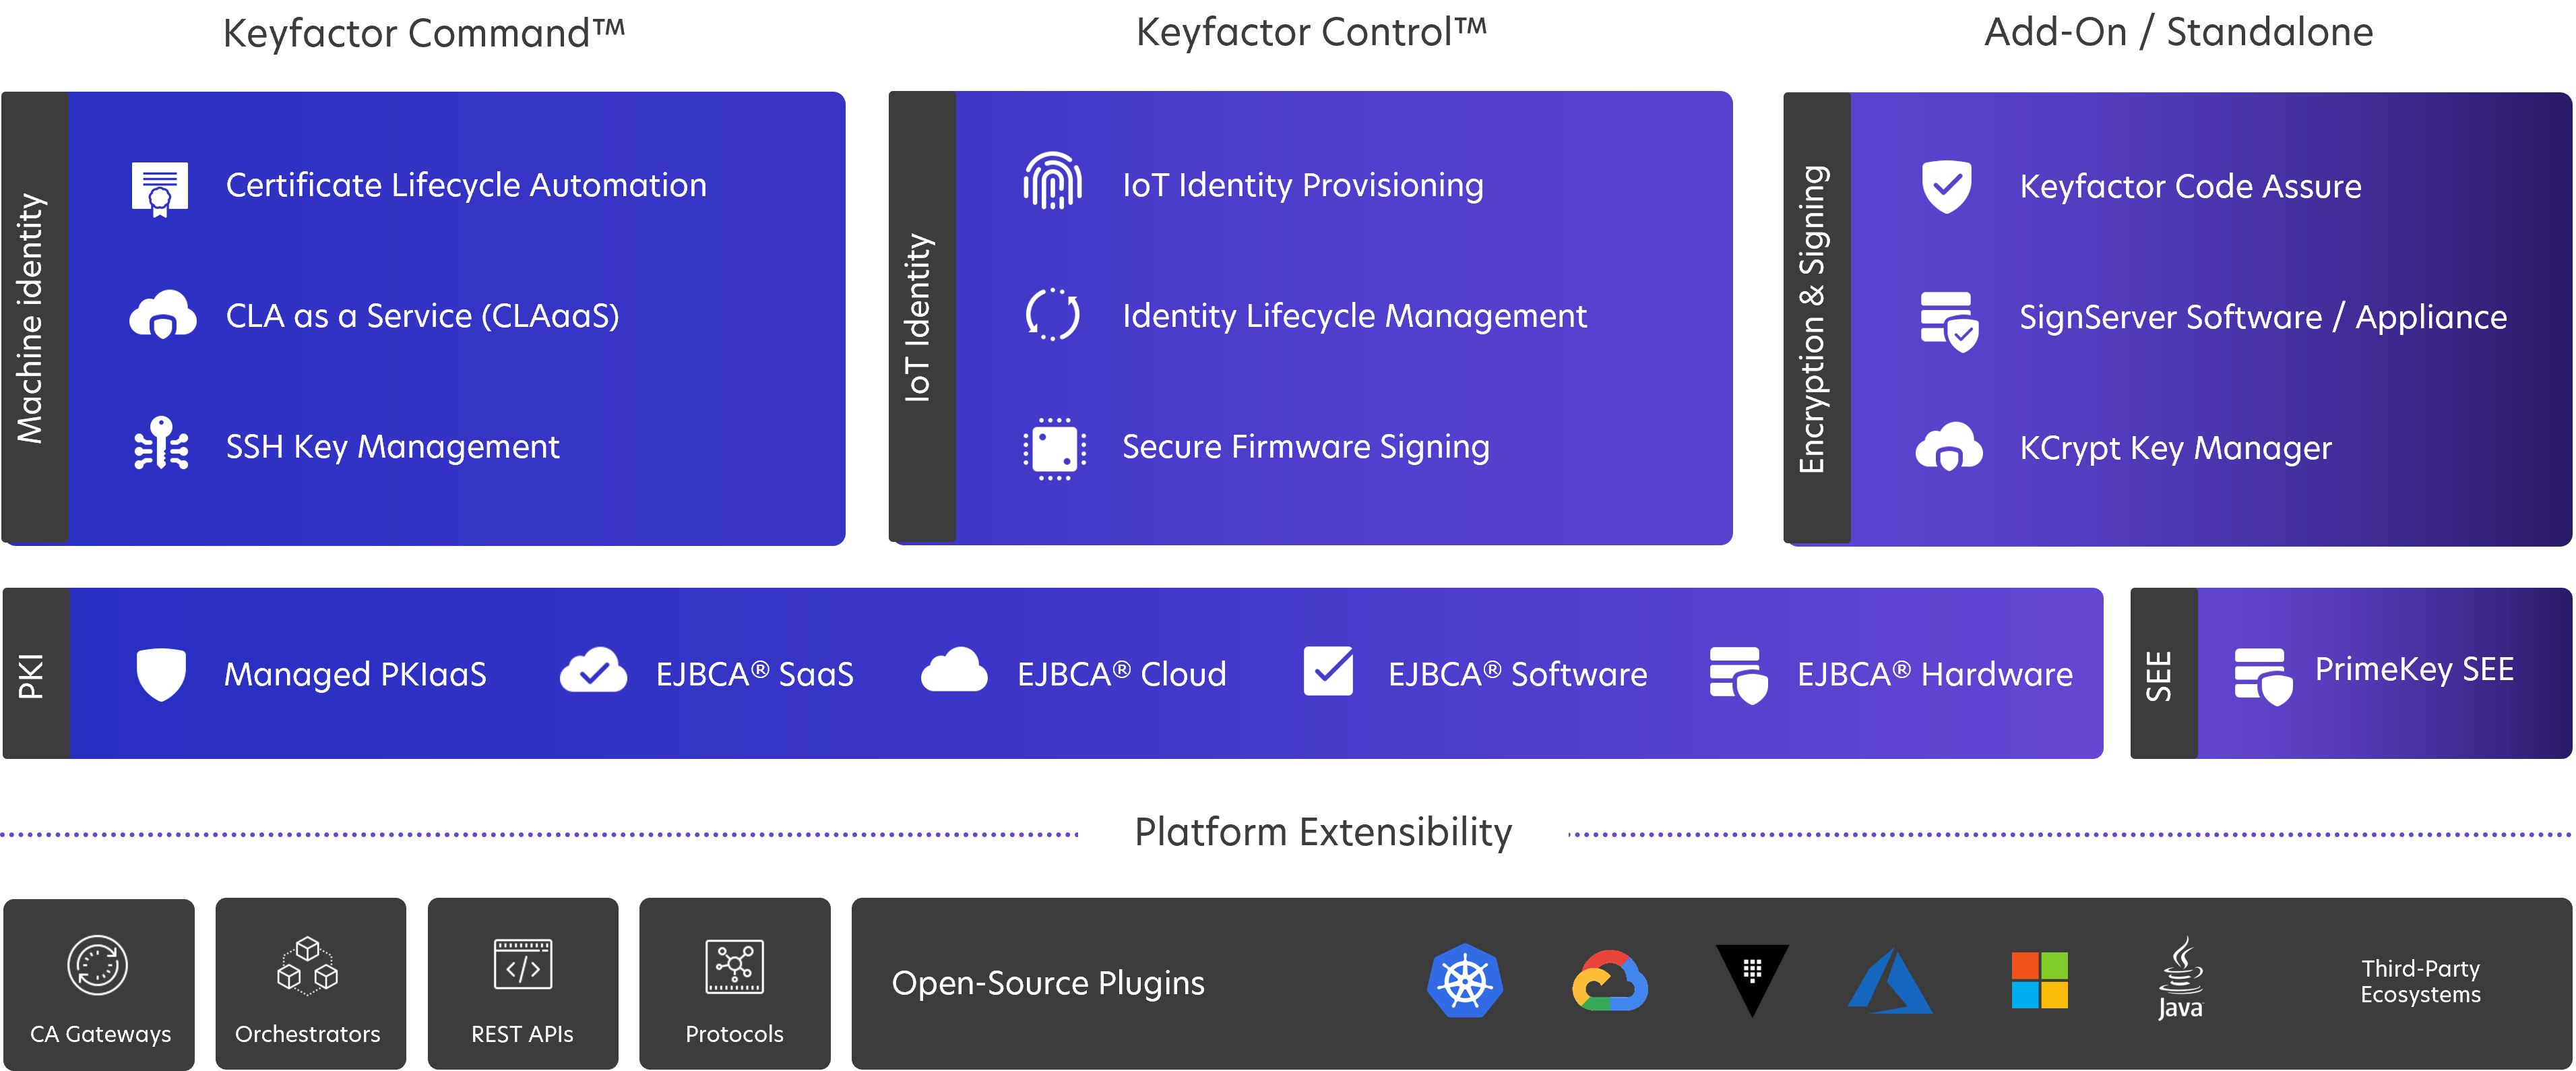 Keyfactor Platform with EJBCA